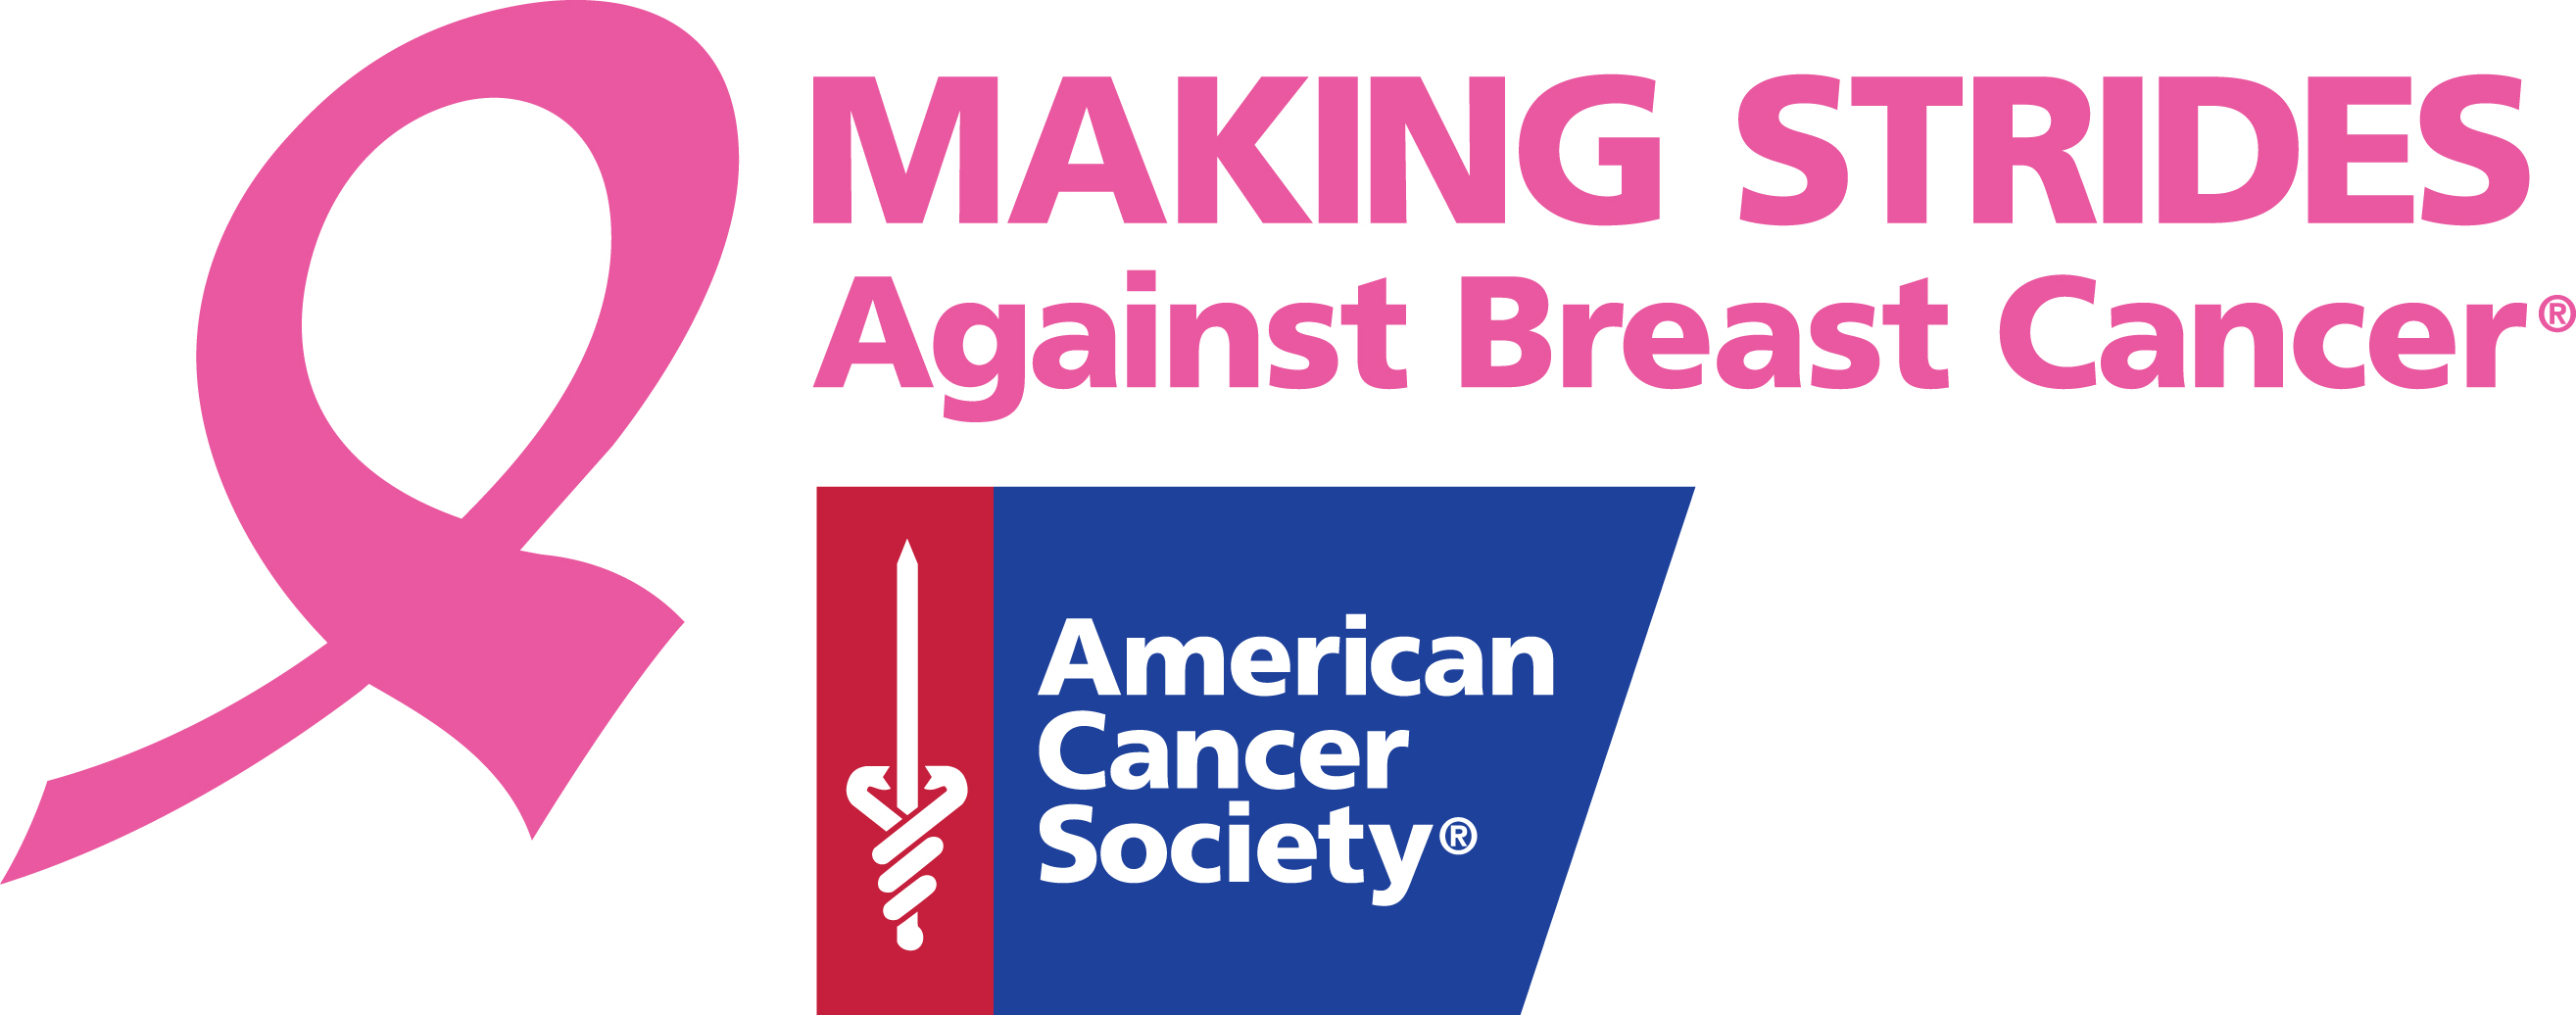 Making Strides Against Breast Cancer Logo photo - 1